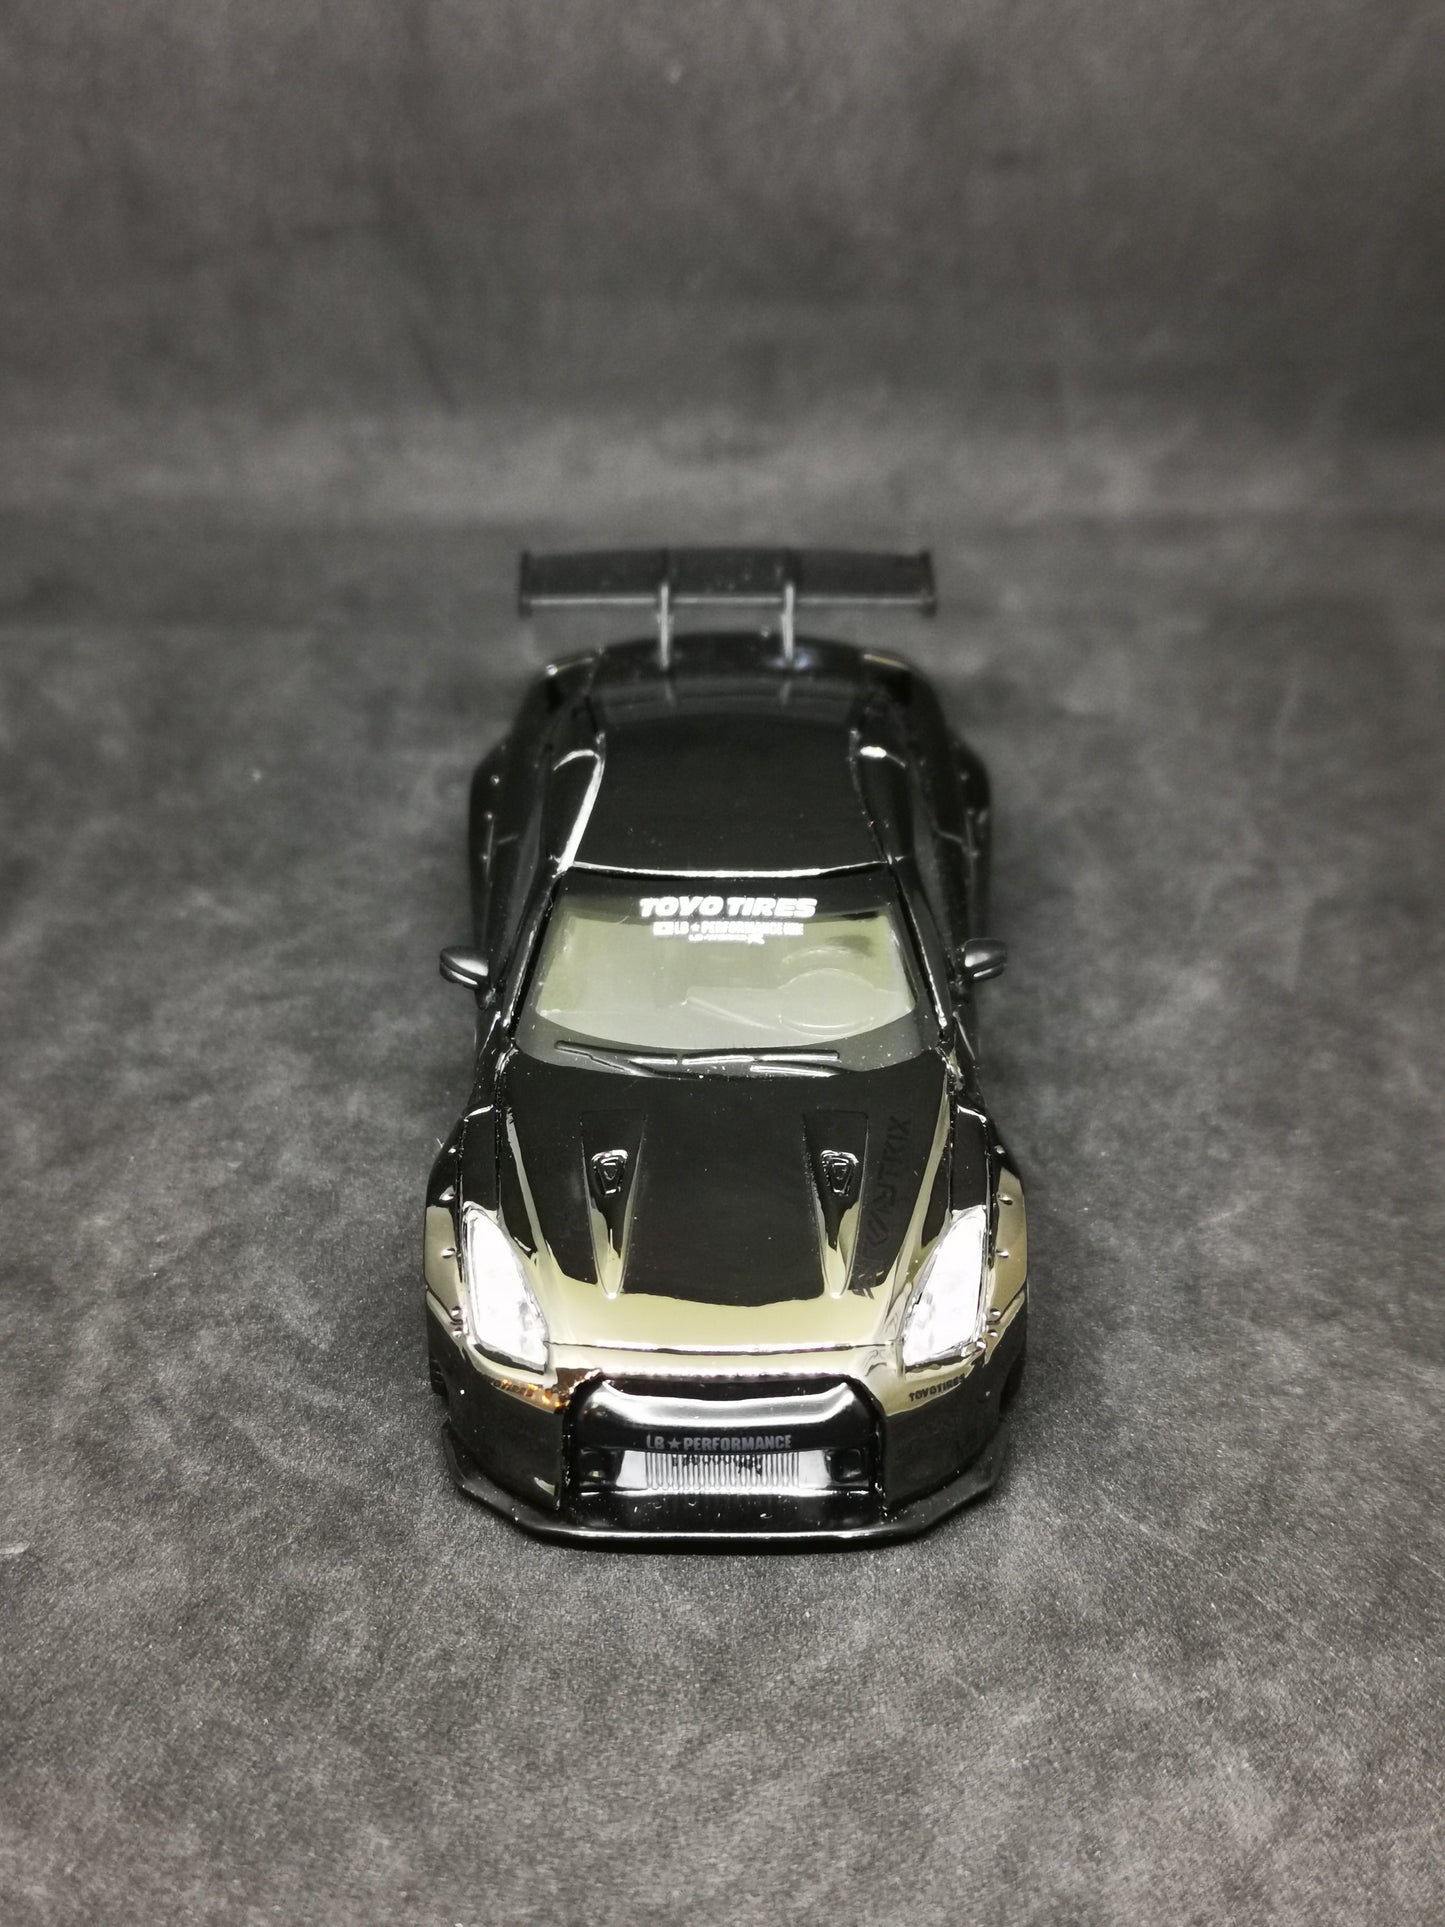 Mini GT No.84 LB Works Nissan GT-R
Black Chrome Mini GT